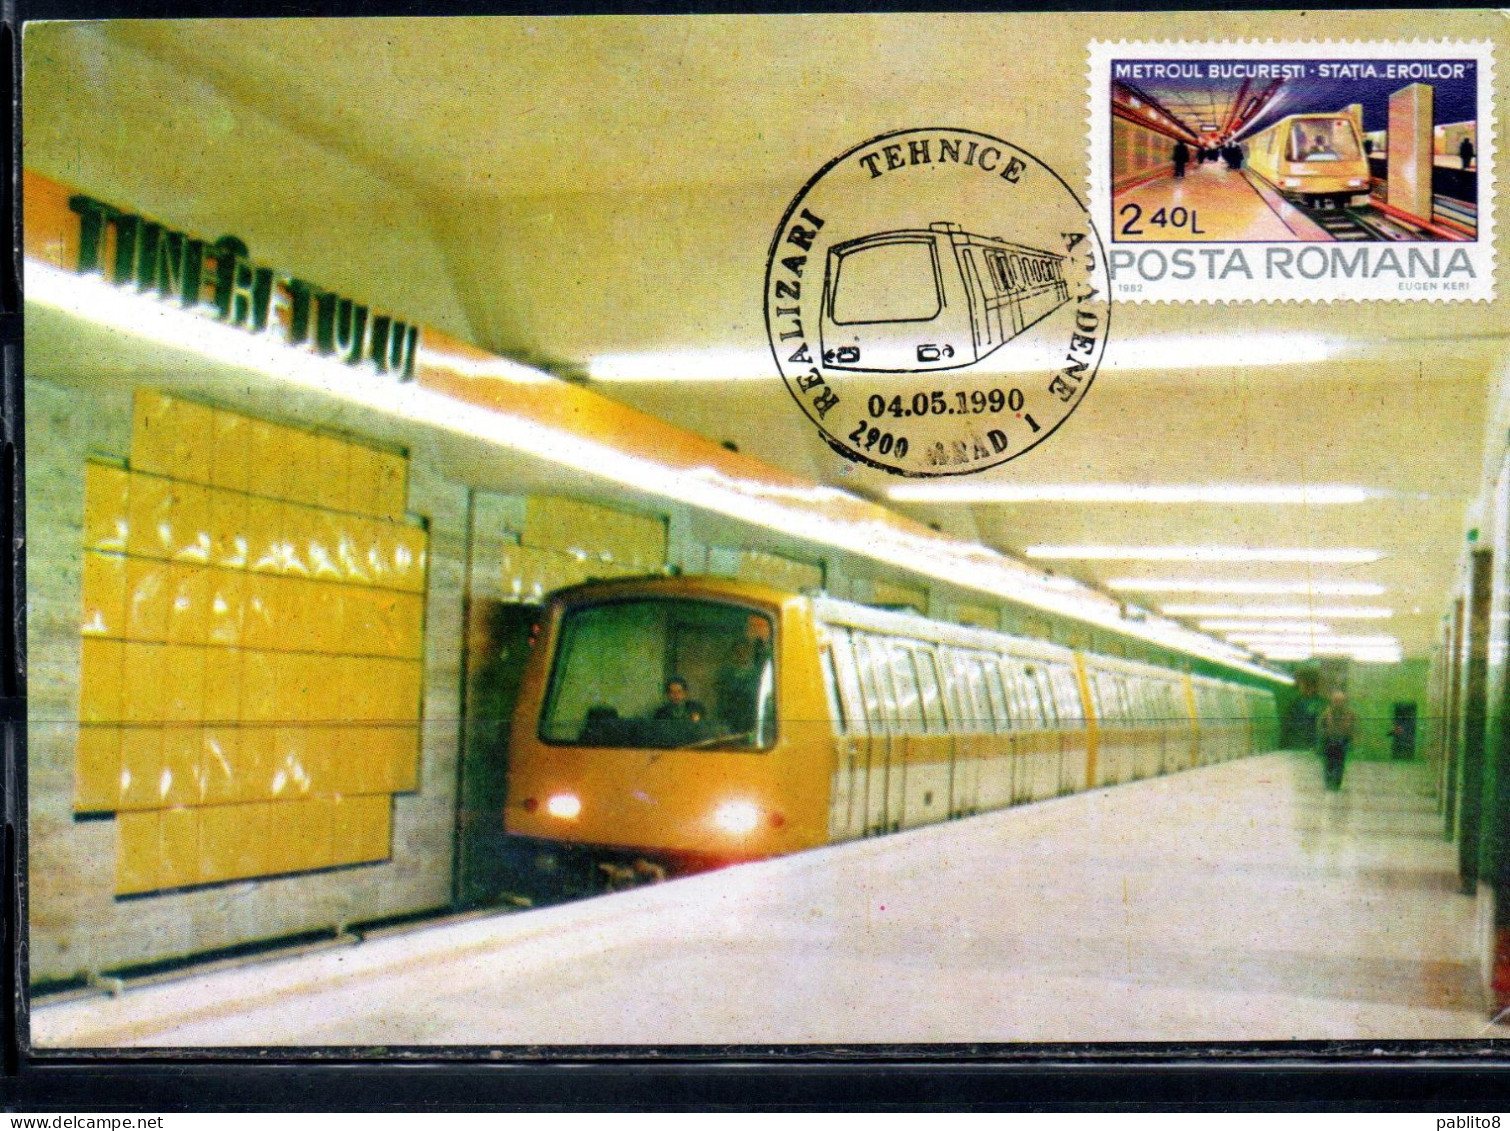 ROMANIA 1982 SUBWAY METROUL BUCARESTI METROPOLITANA 2.40L MAXI MAXIMUM CARD - Tarjetas – Máximo